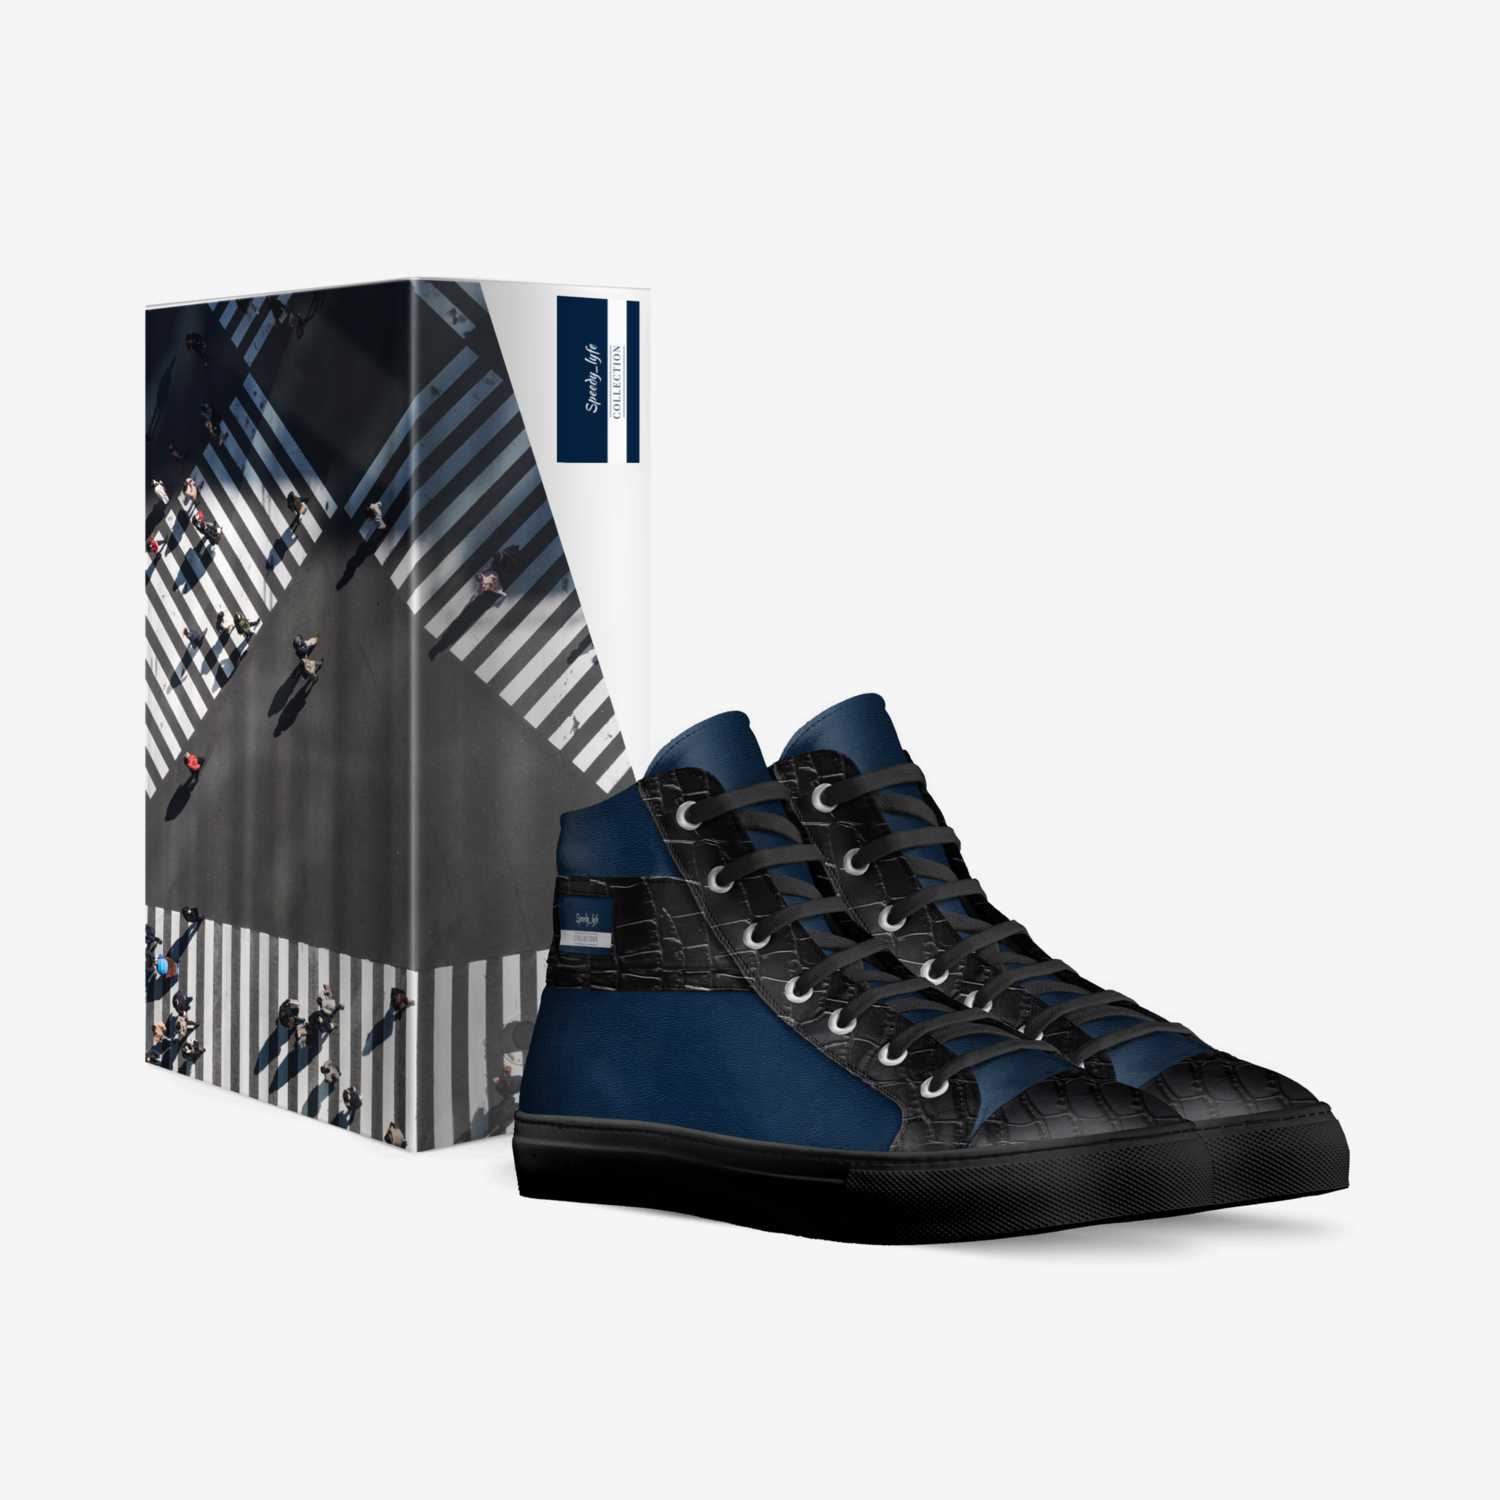  New Organization custom made in Italy shoes by Warneka Jackson | Box view